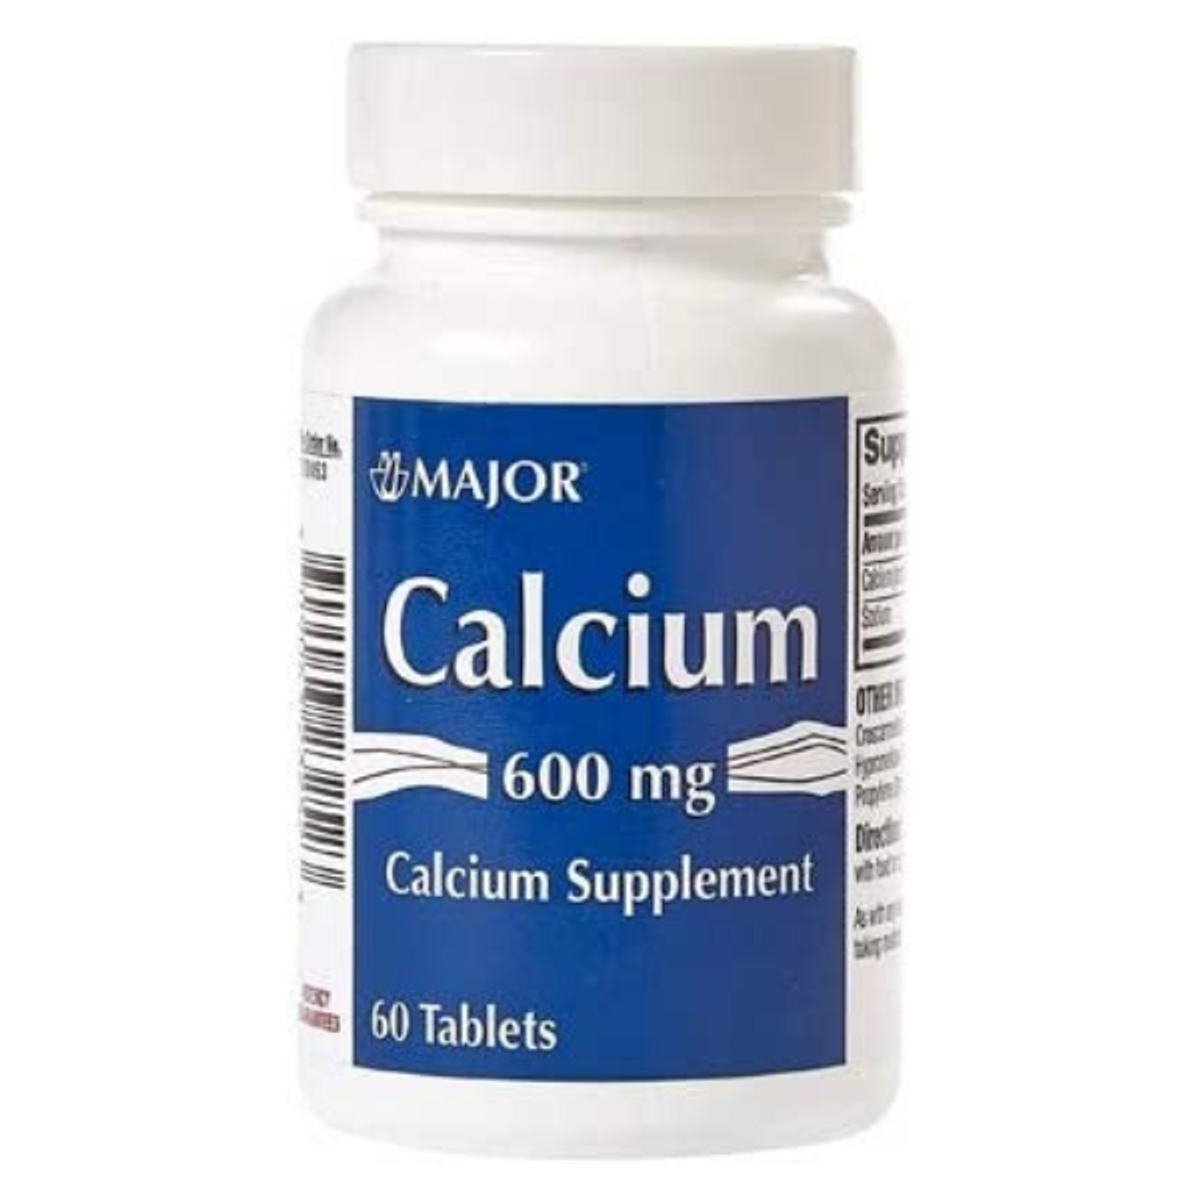 Major Calcium Supplement